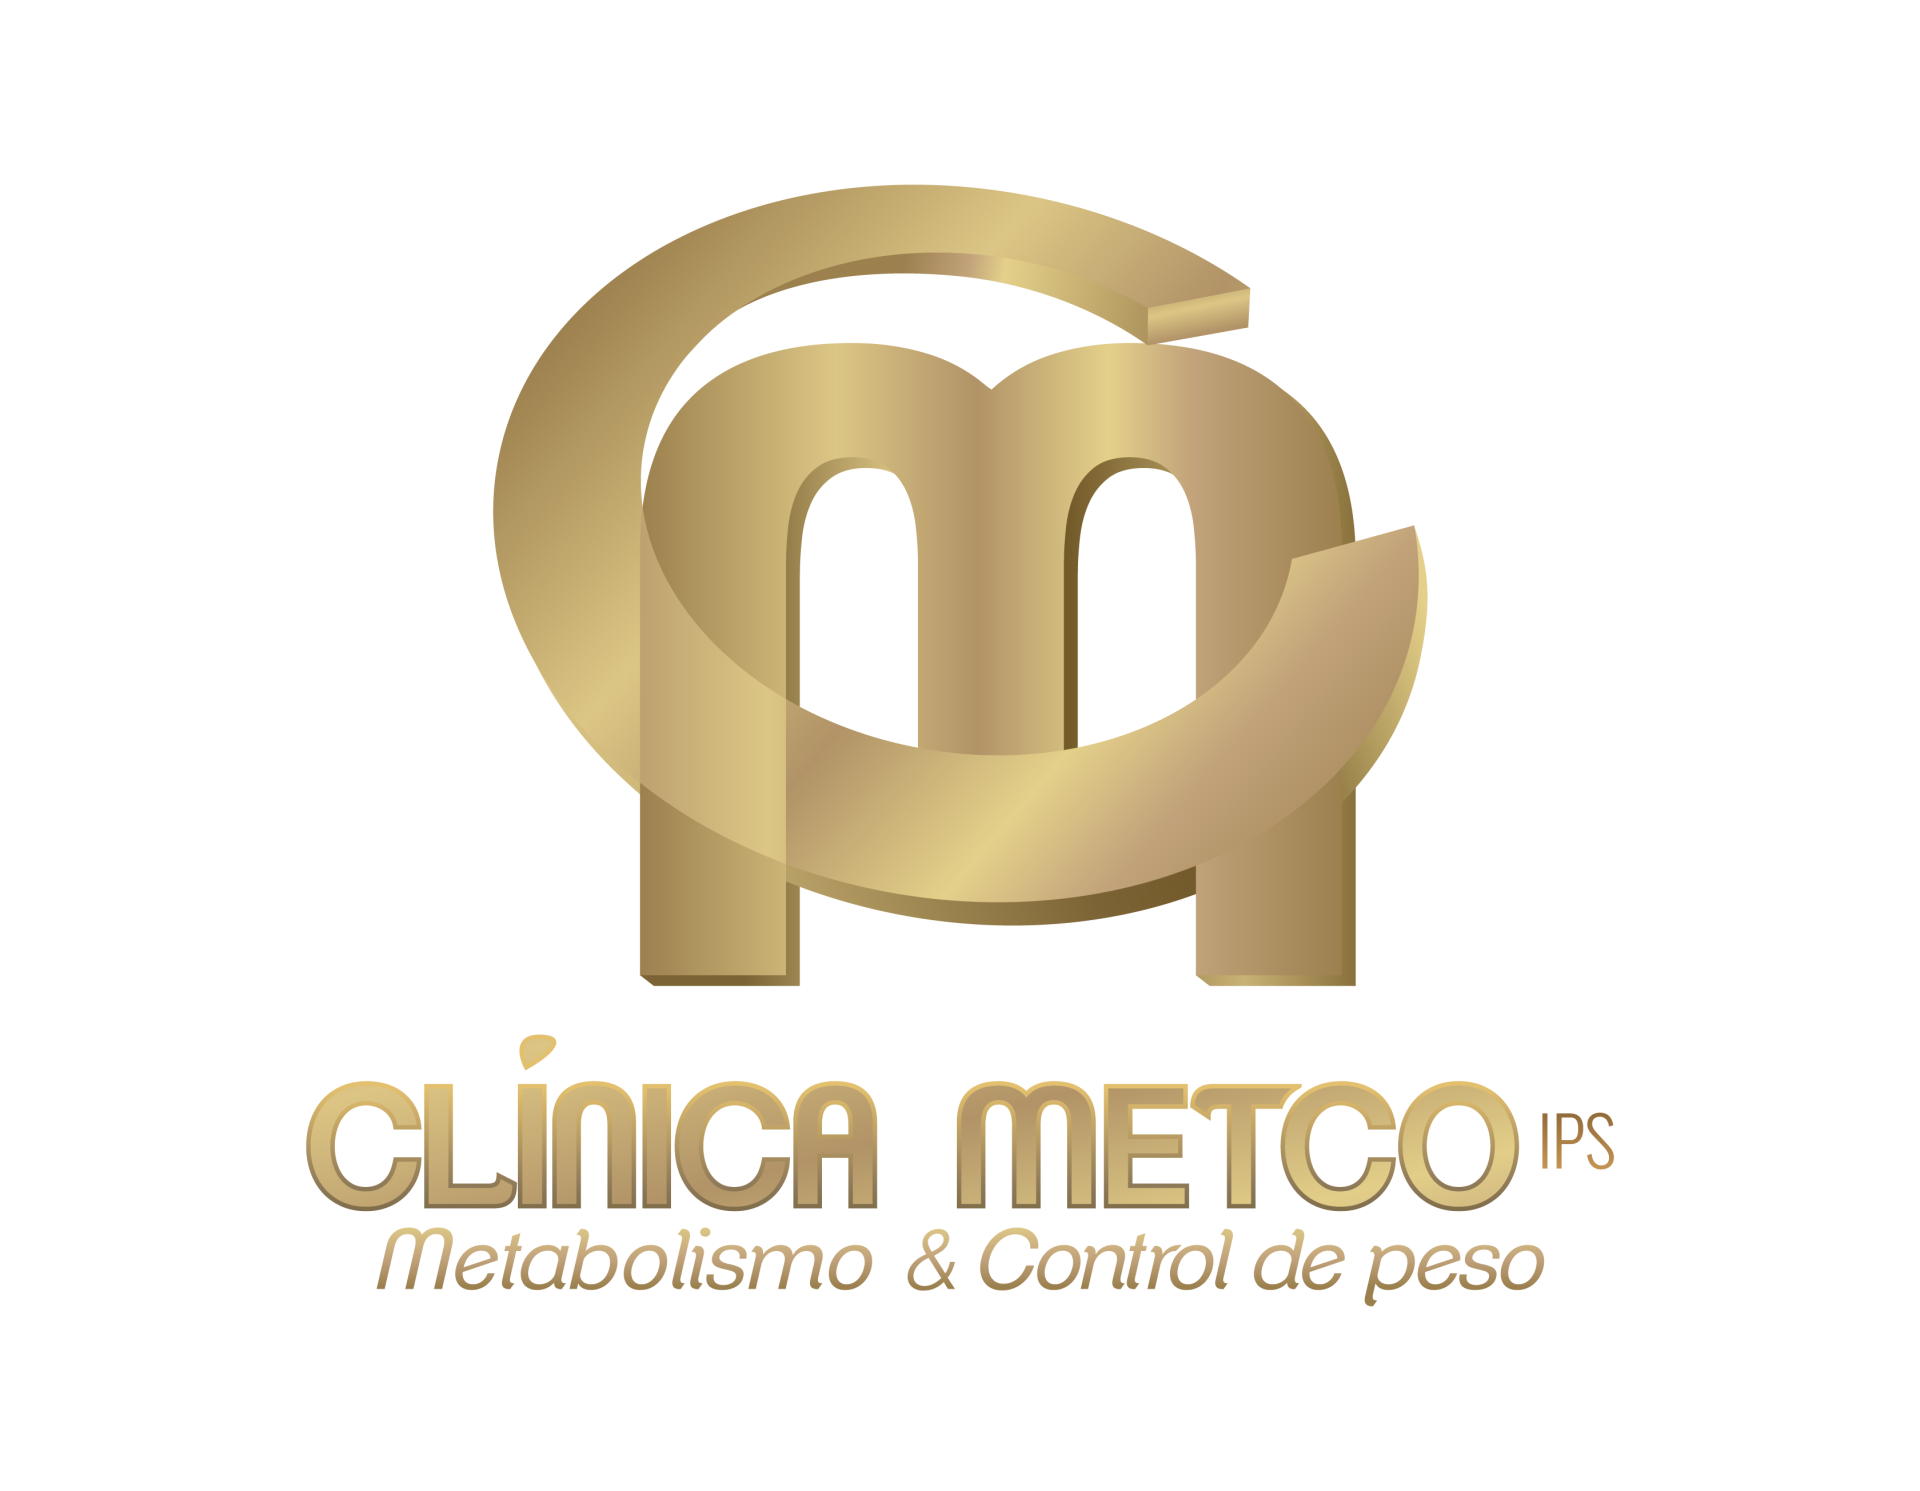 Clínica Metco IPS